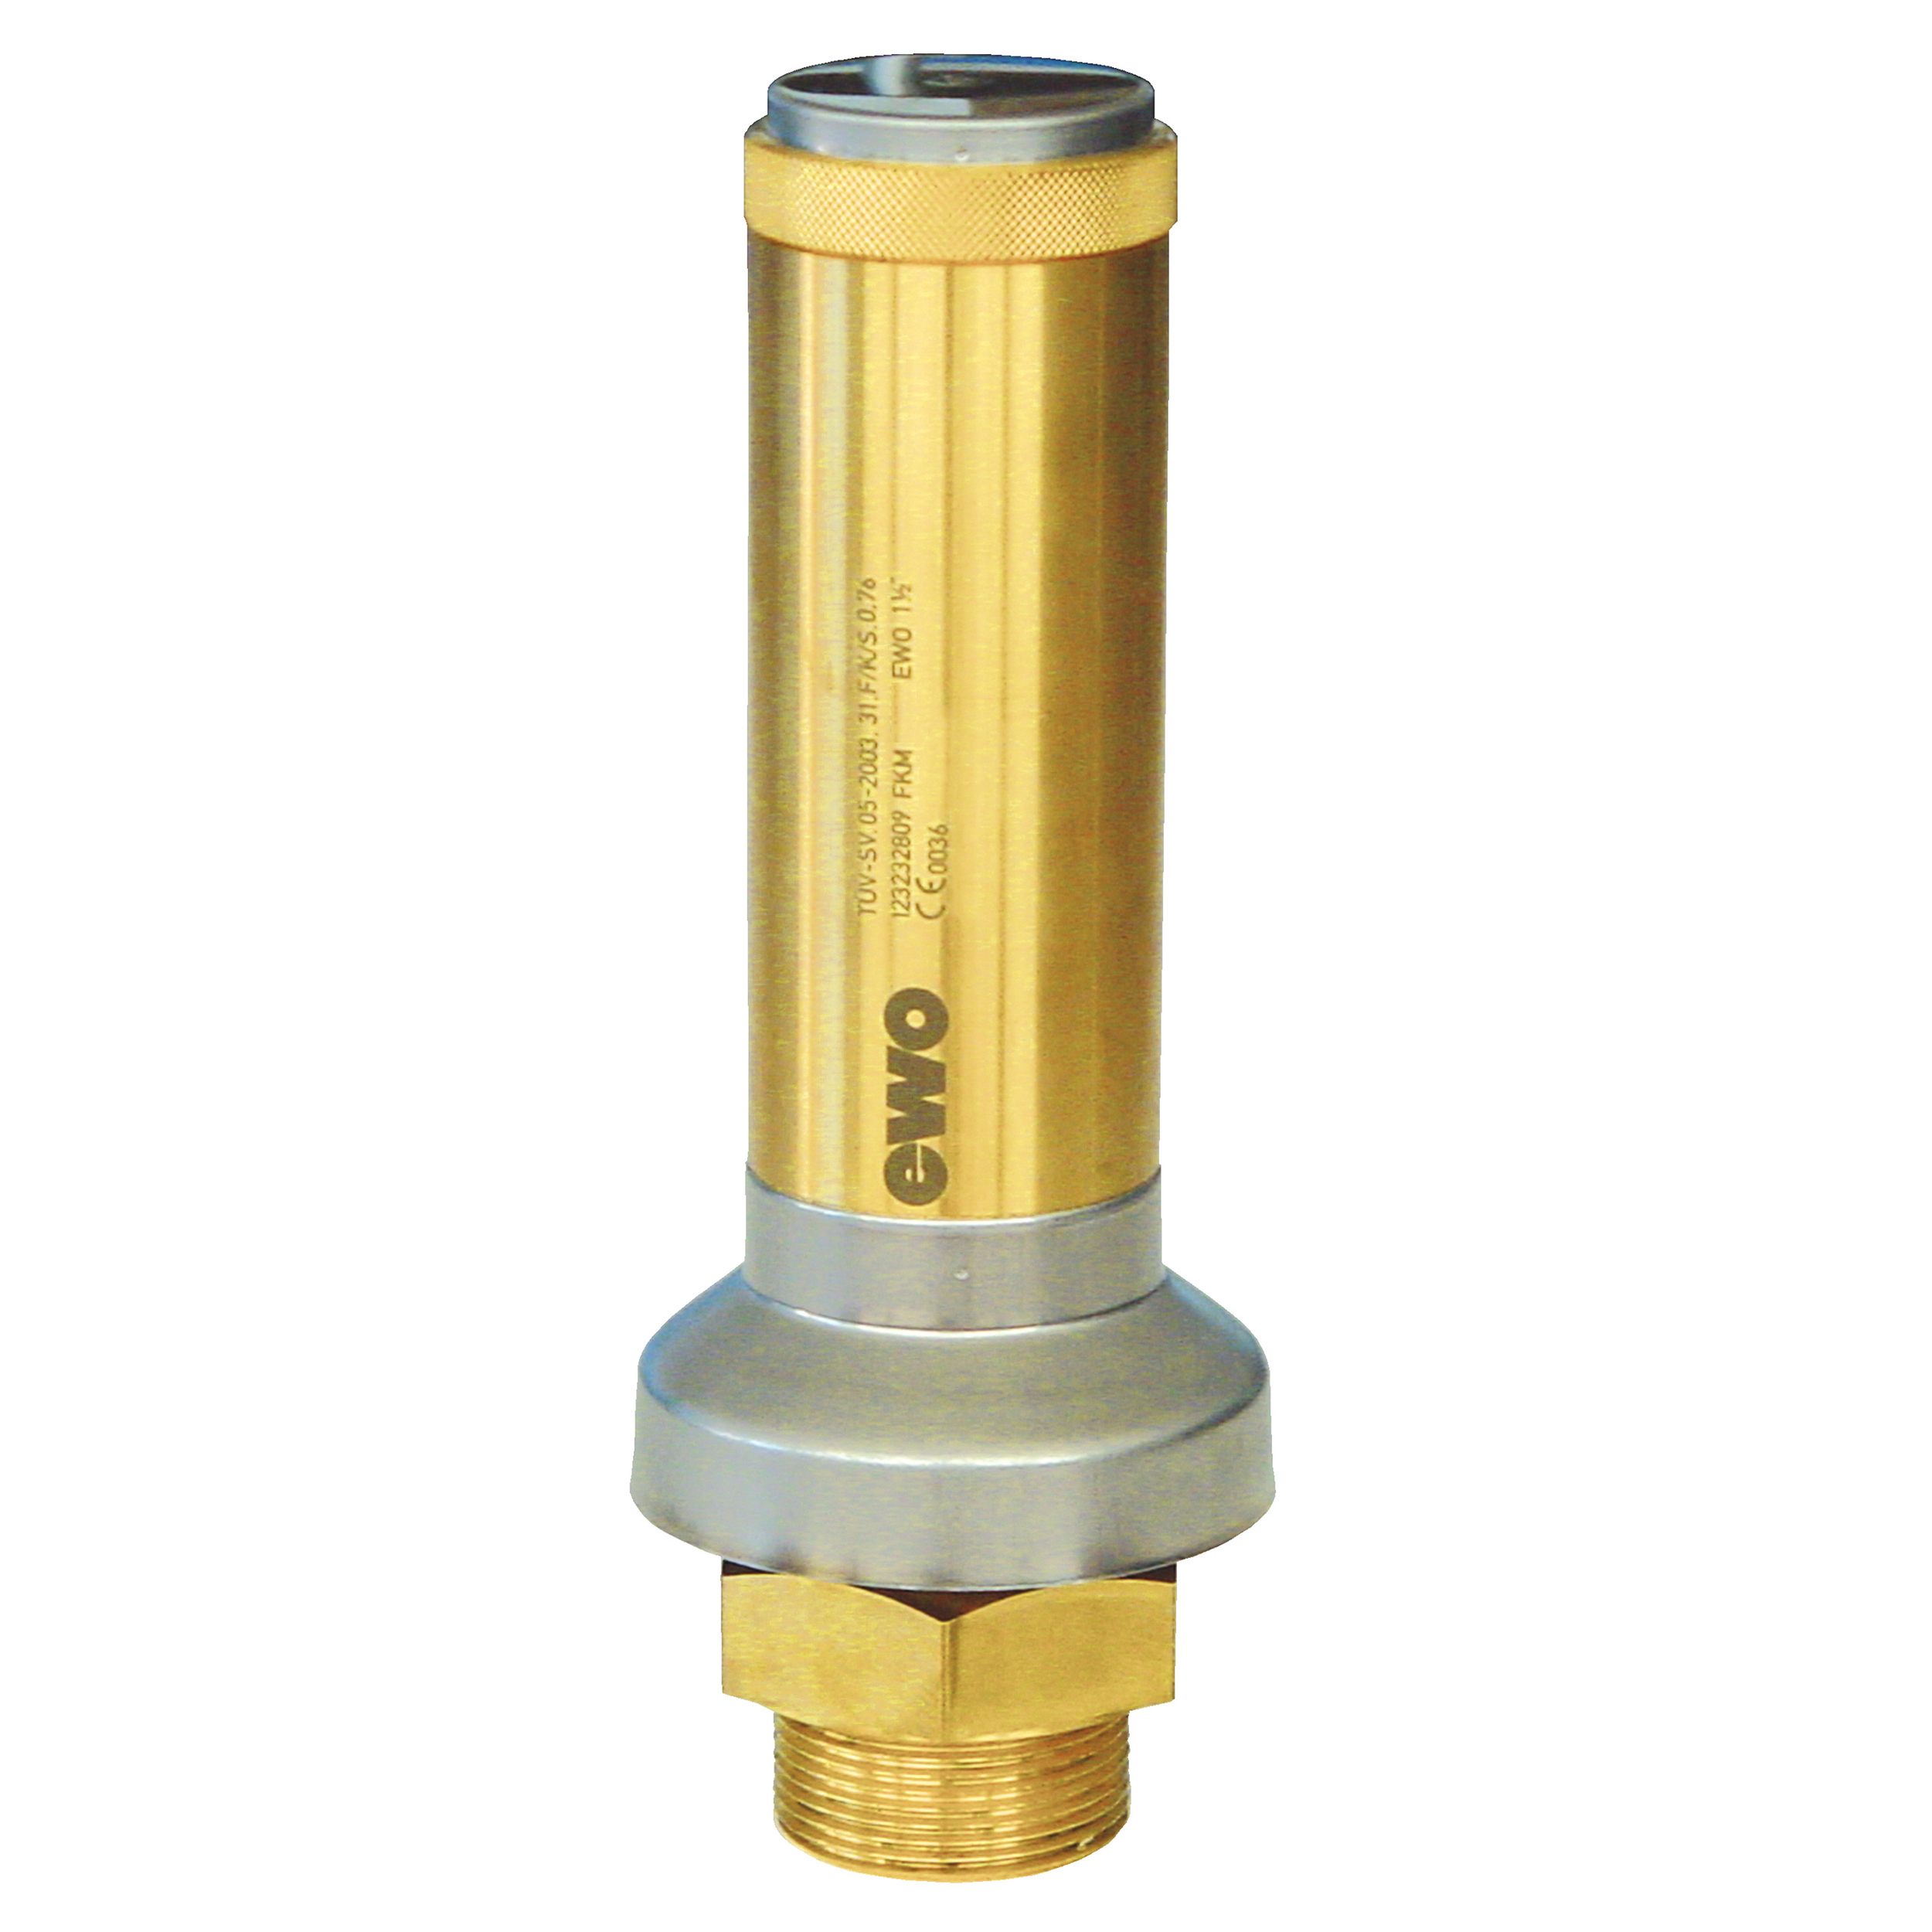 Savety valve component tested, F/K/S, G1, DN 24, L: 215 mm, seal: FKM, set pressure 2.0-6 bar